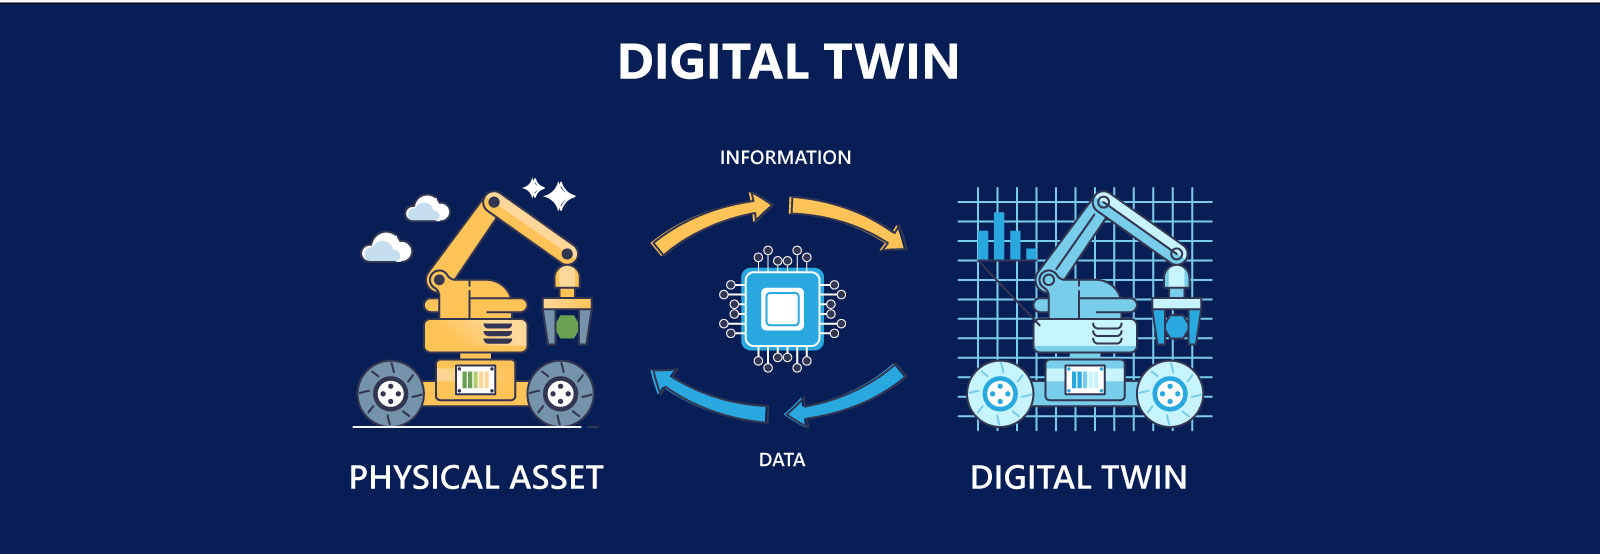 Digital Twin graphic